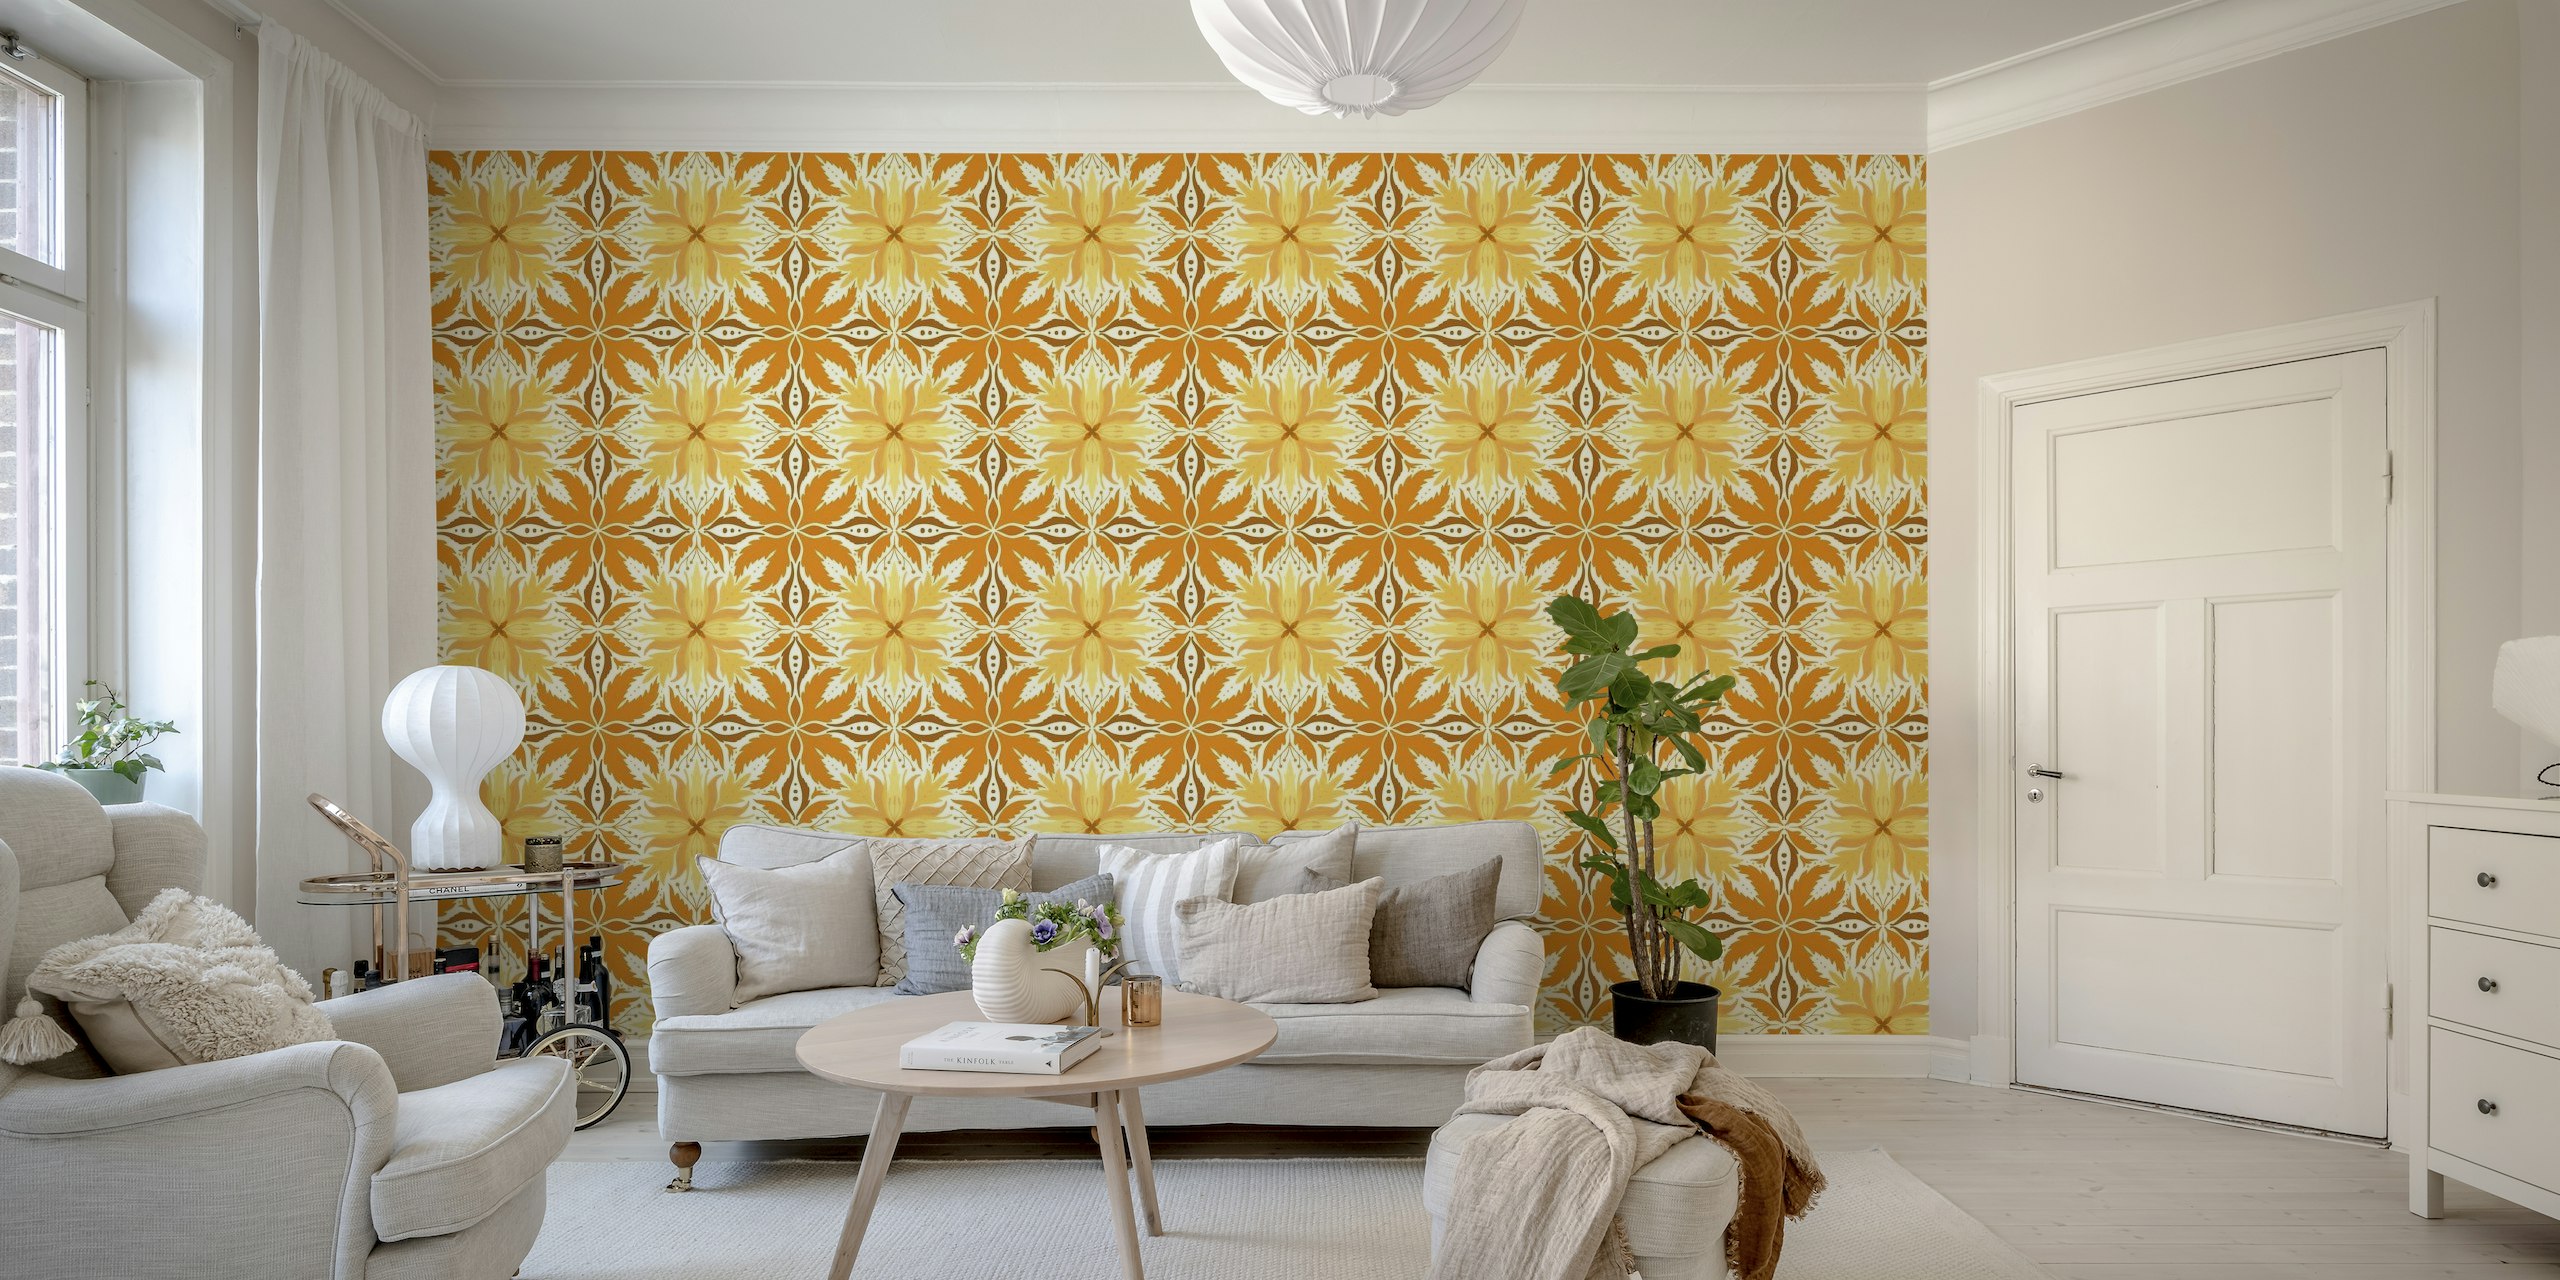 Ornate tiles, yellow and orange wallpaper